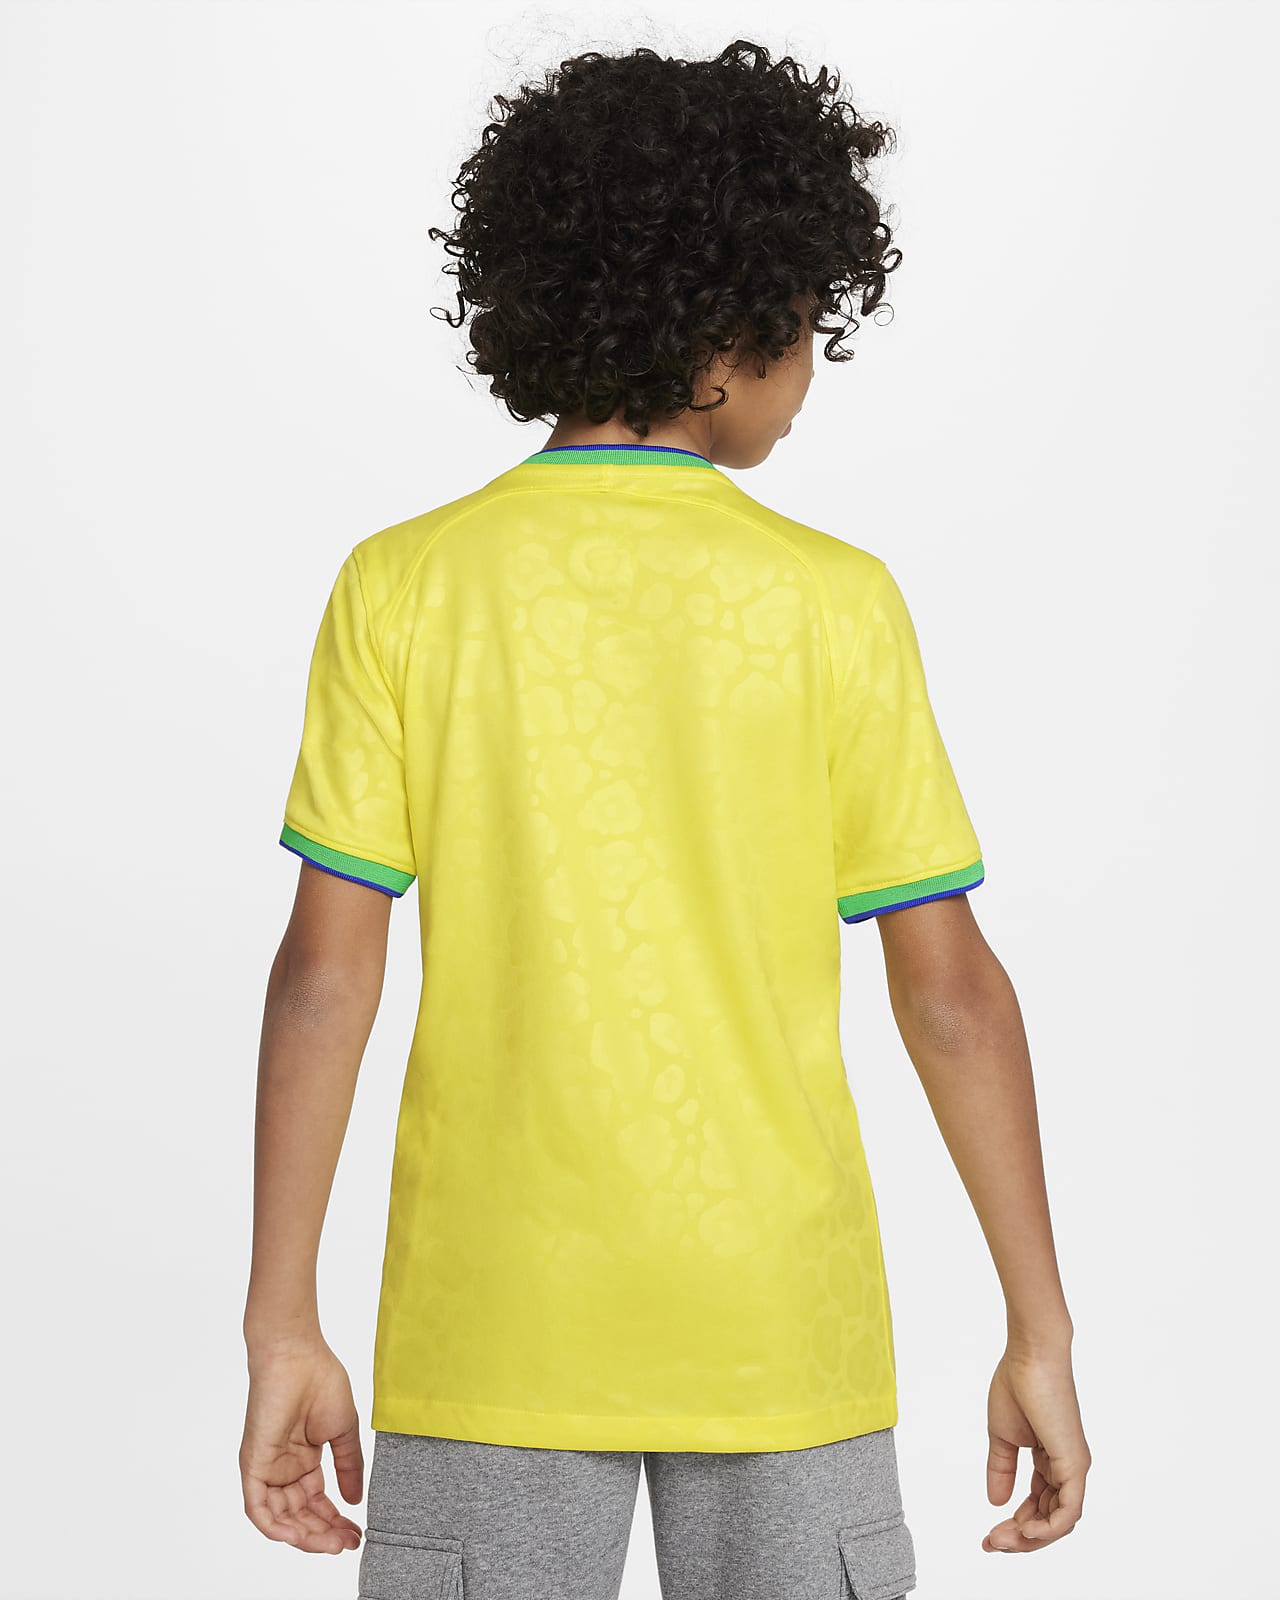 Nike Football World Cup 2022 Brazil unisex travel t-shirt in blue